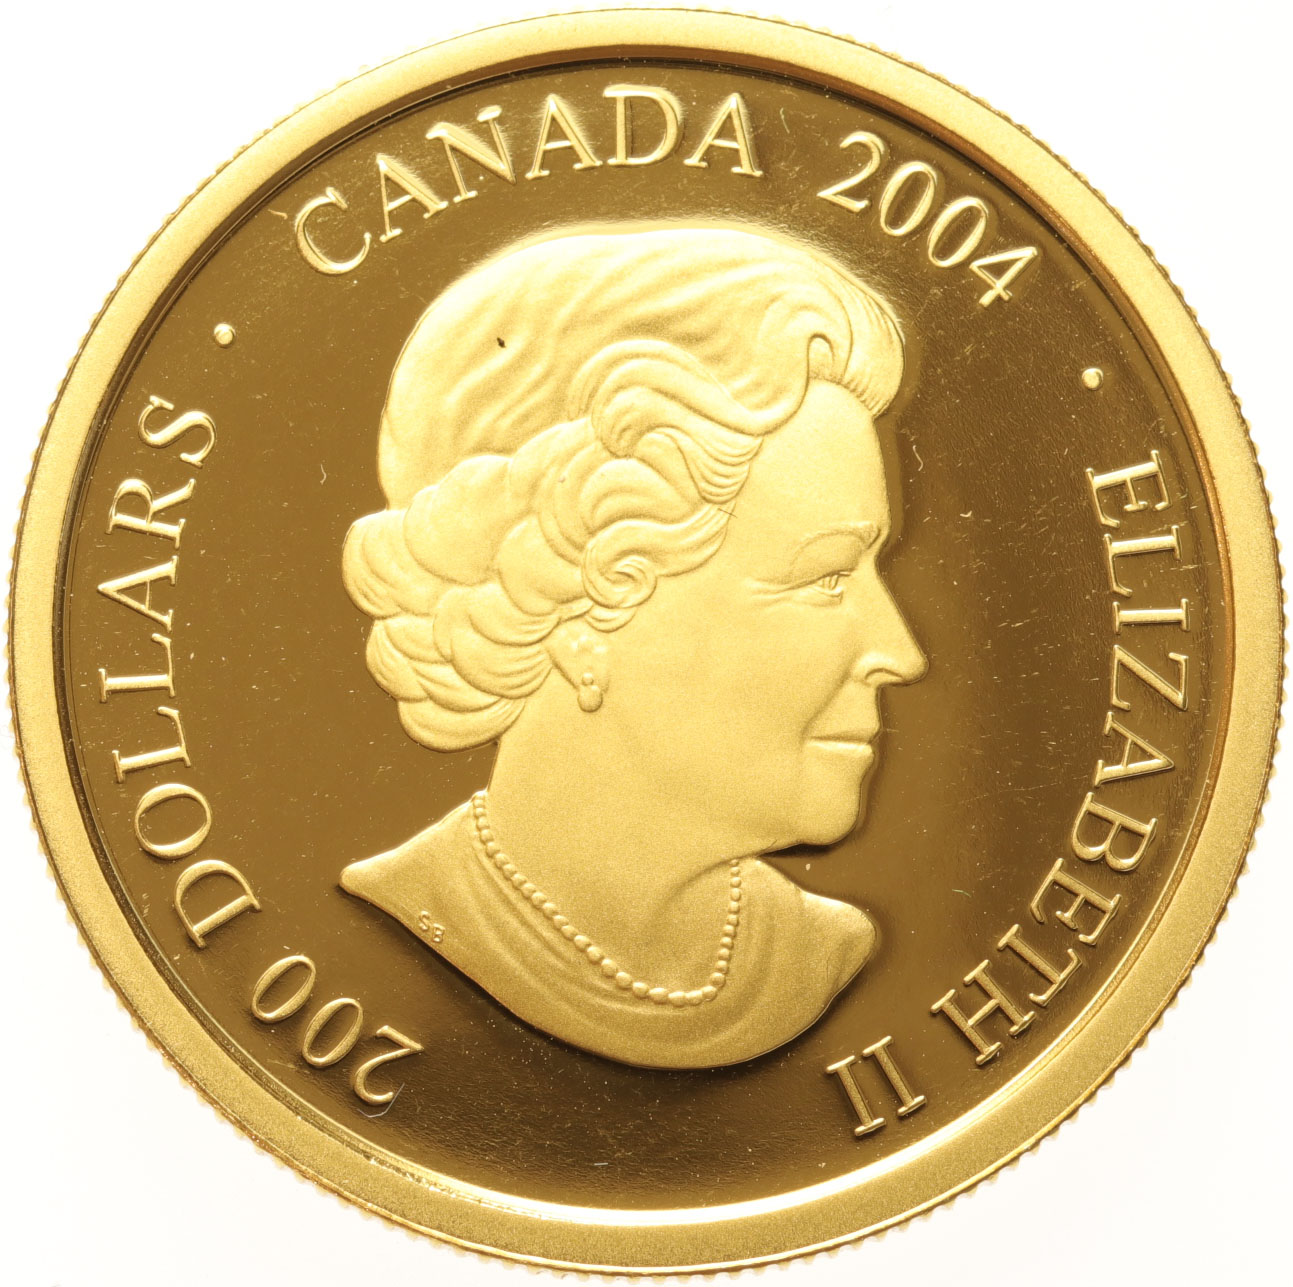 Canada 200 dollars 2004